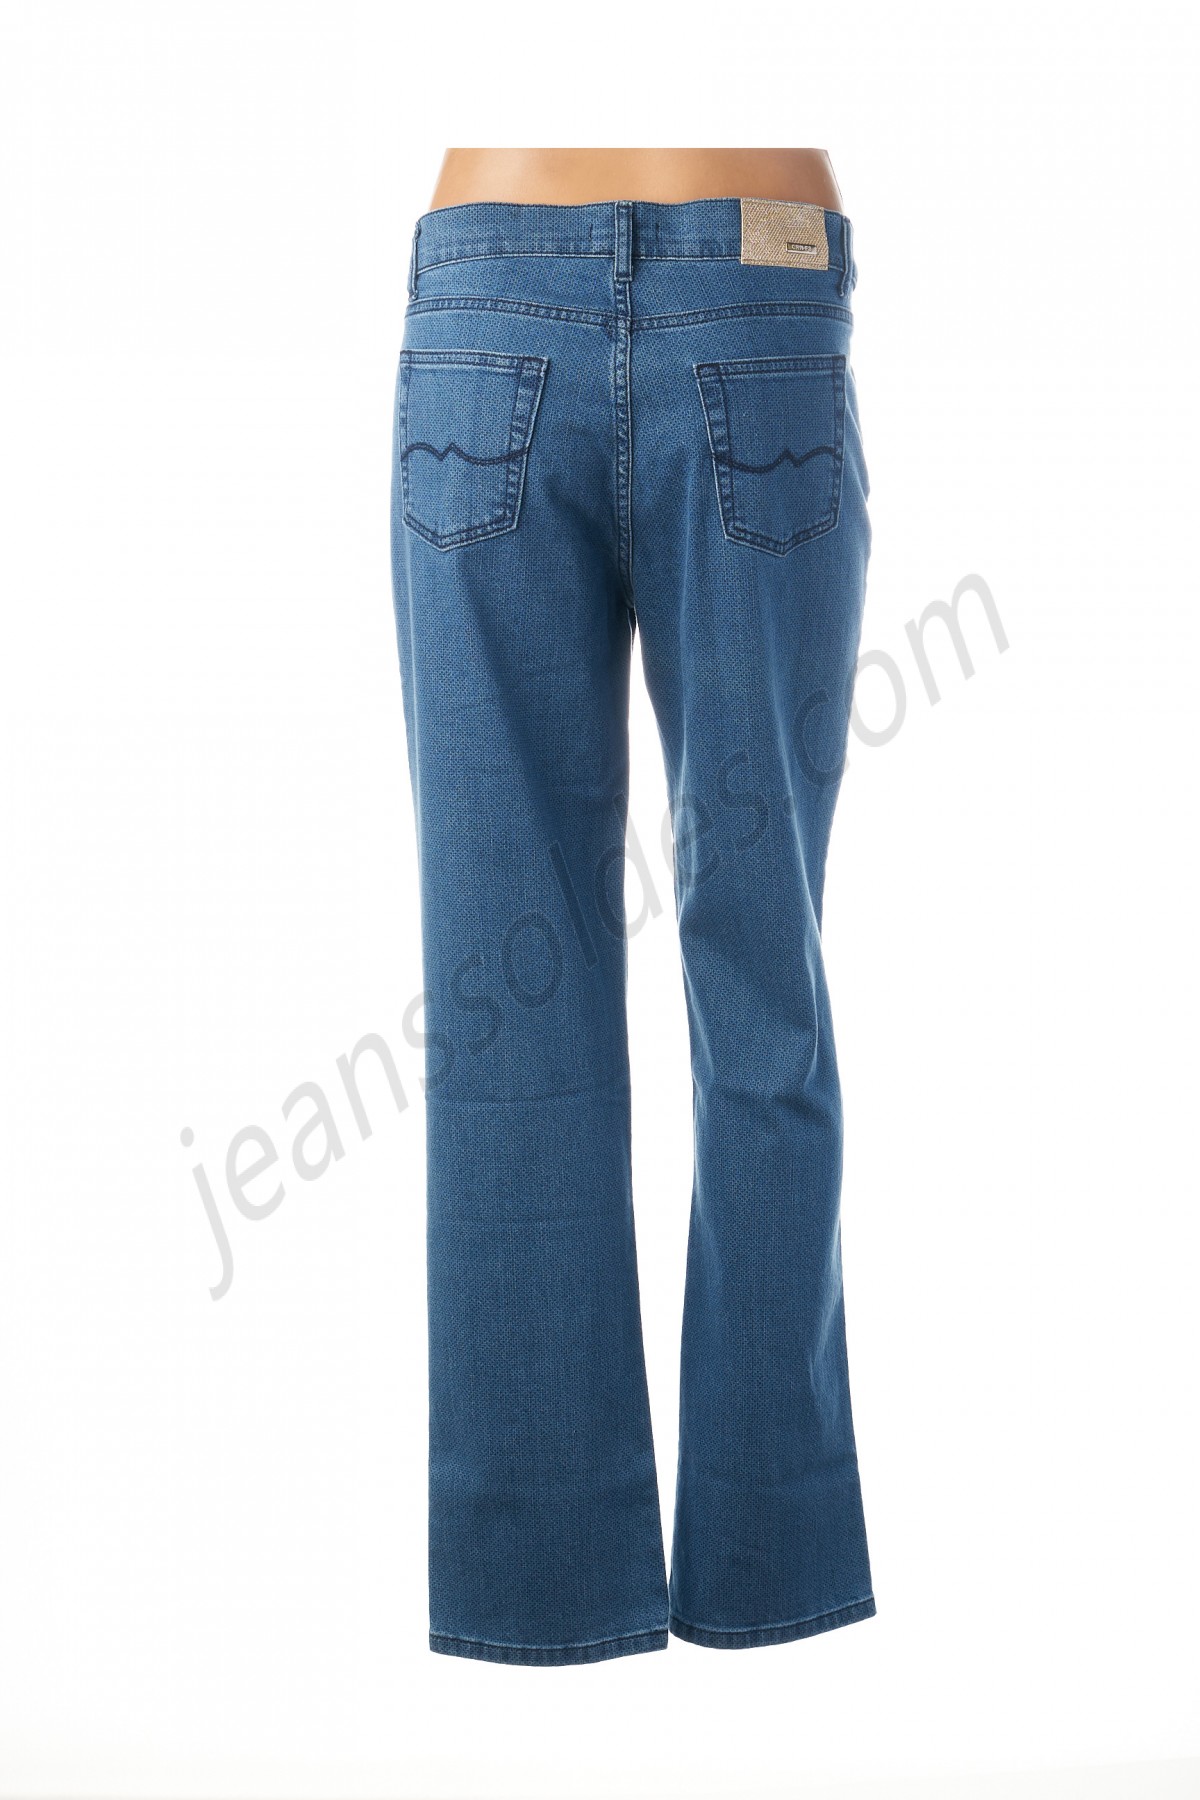 crn-f3-Jeans coupe droite prix d’amis - -1